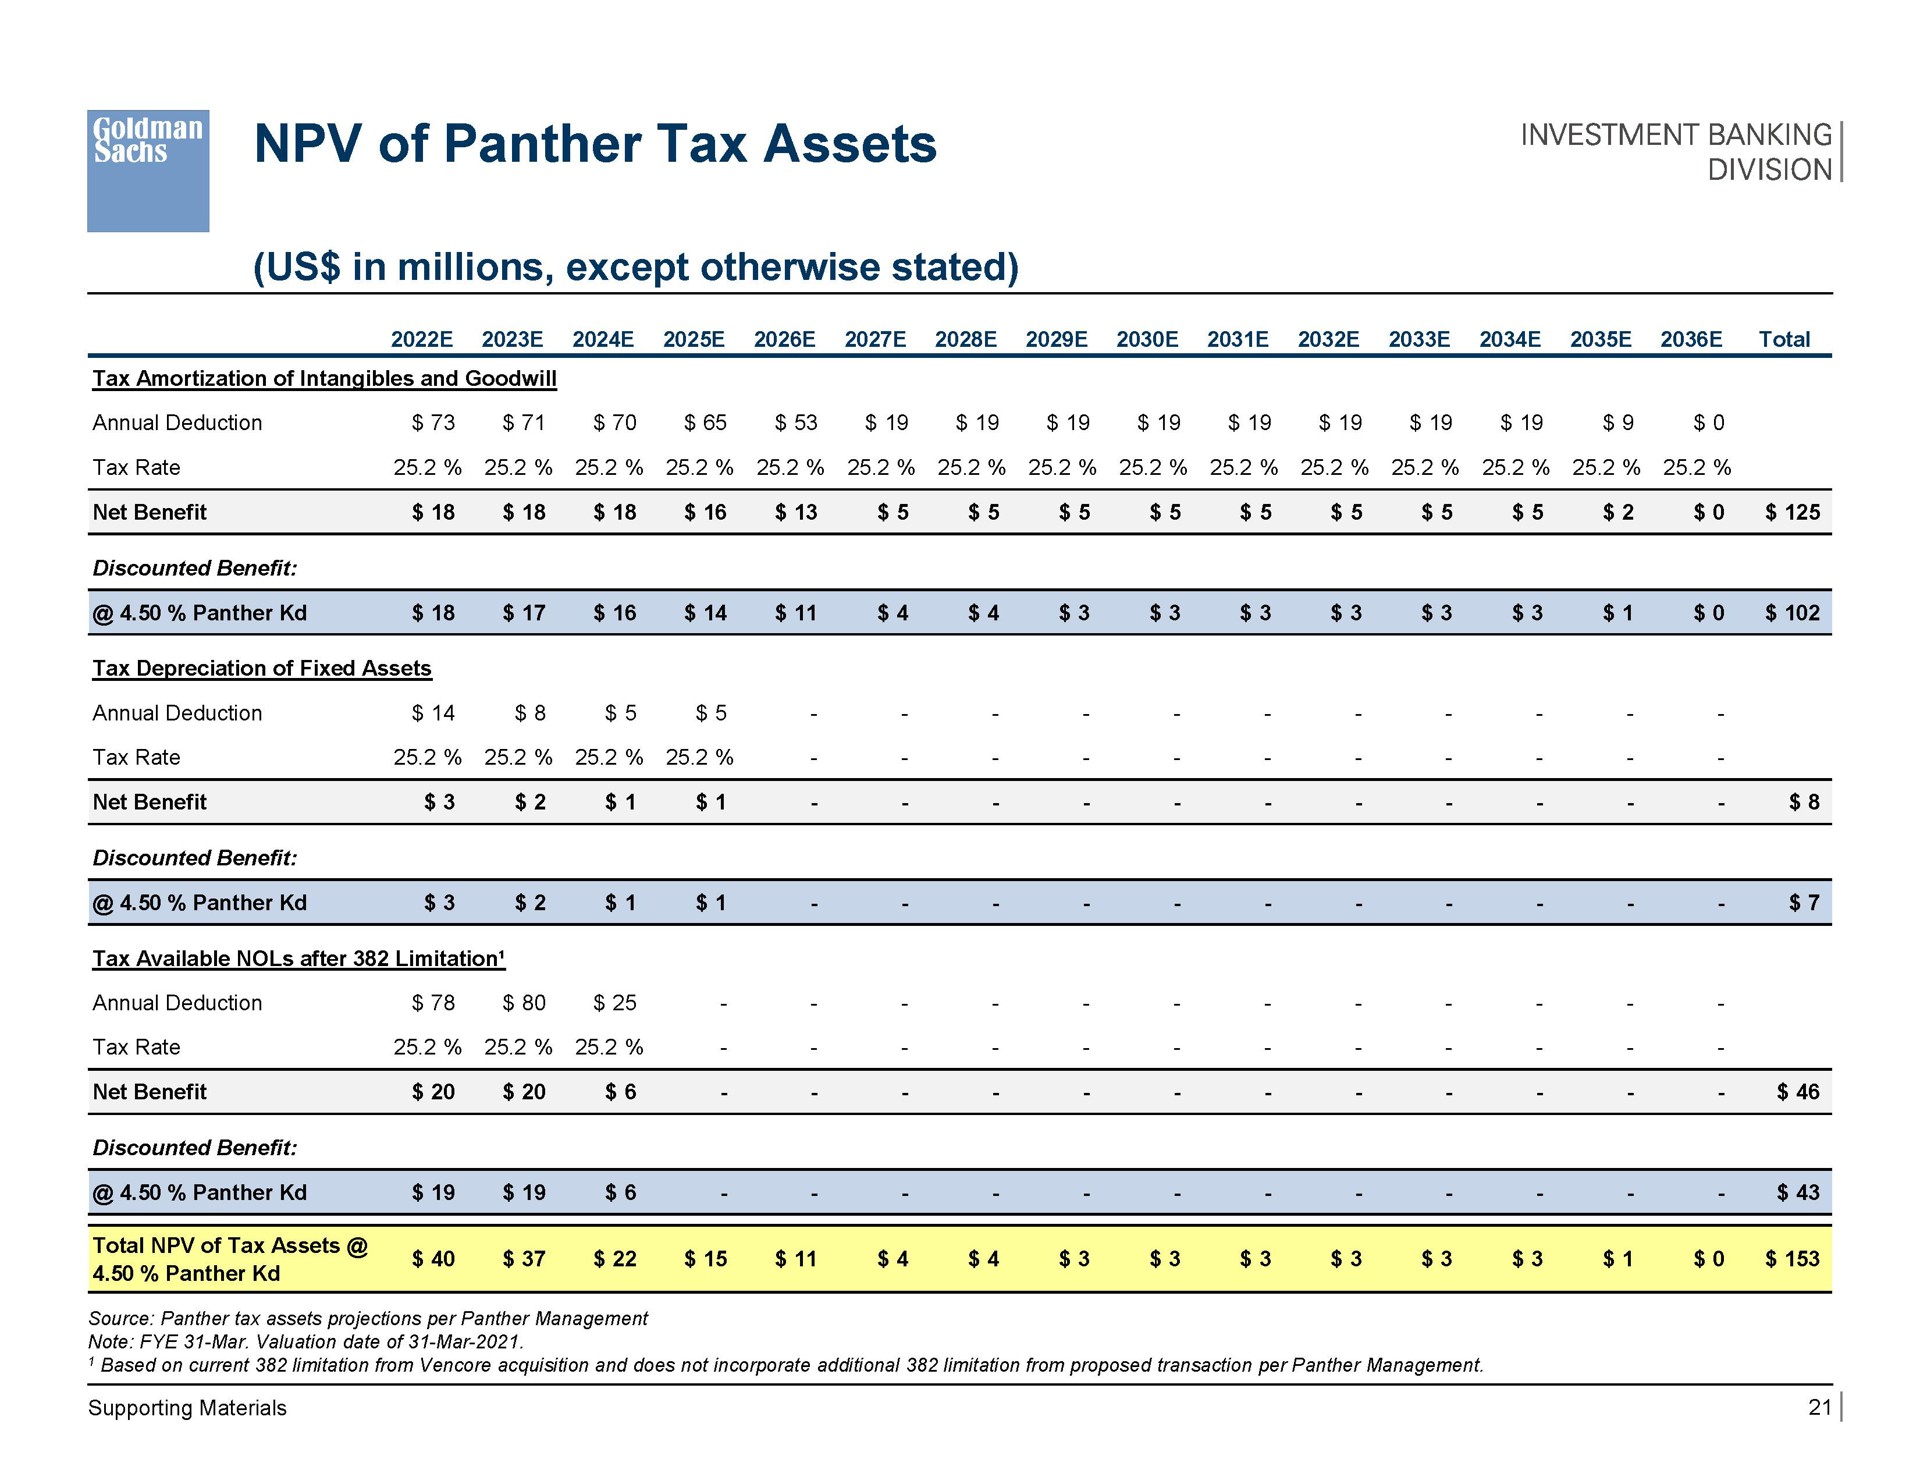 of panther tax assets | Goldman Sachs